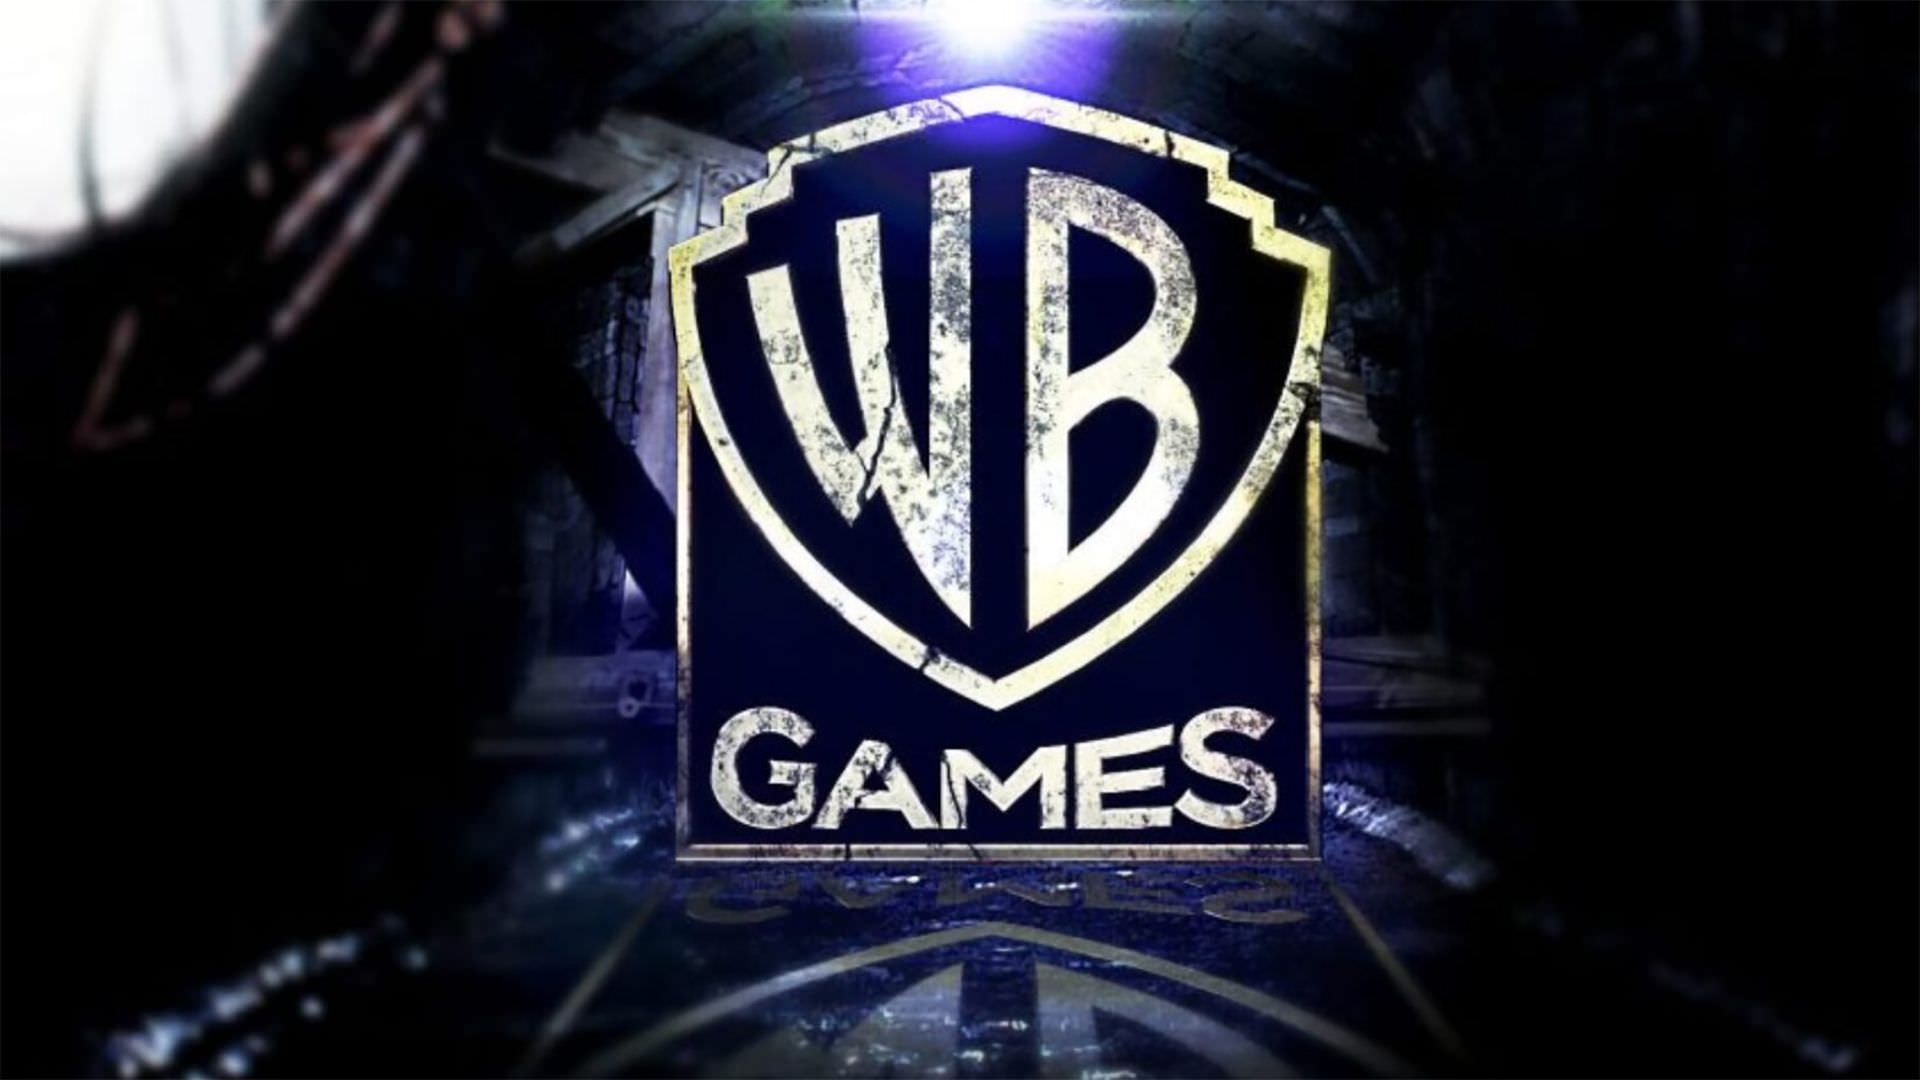 warner bros wb games logo  Image of warner bros wb games logo